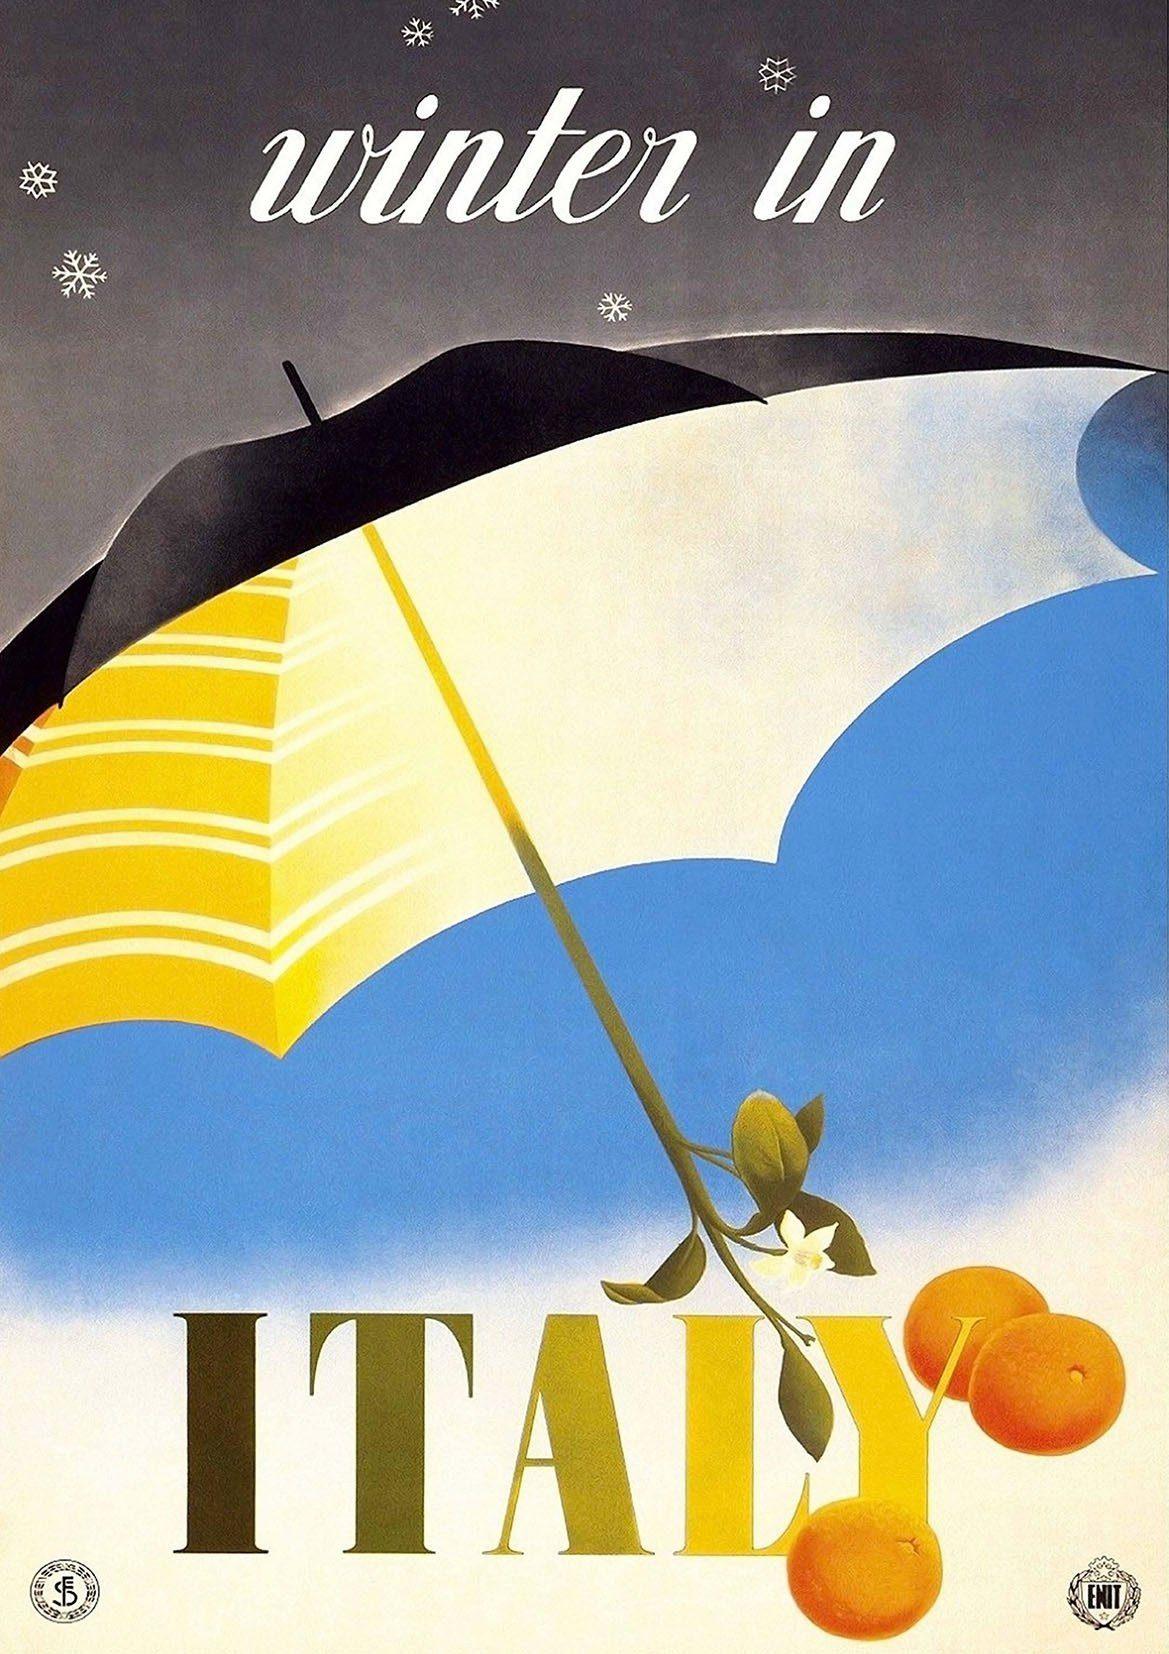 WINTER IN ITALY POSTER: Vintage Italian Travel Advert Print - Pimlico Prints